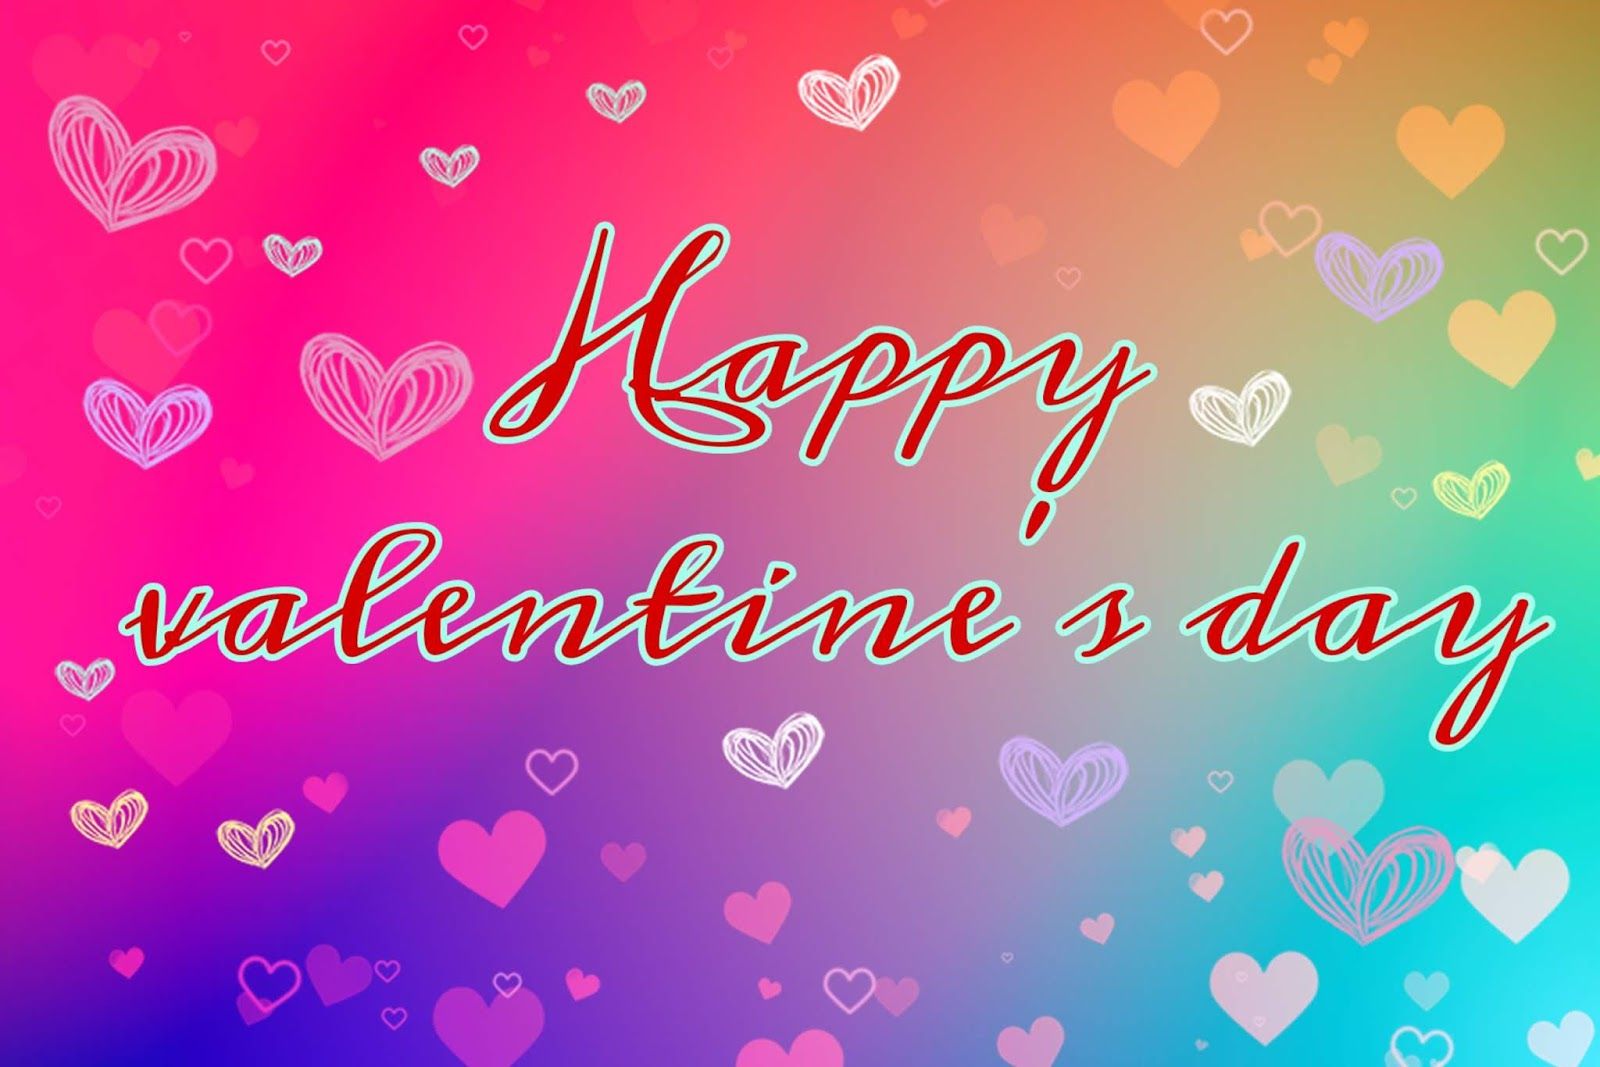 Best Happy valentines day HD image download 2021